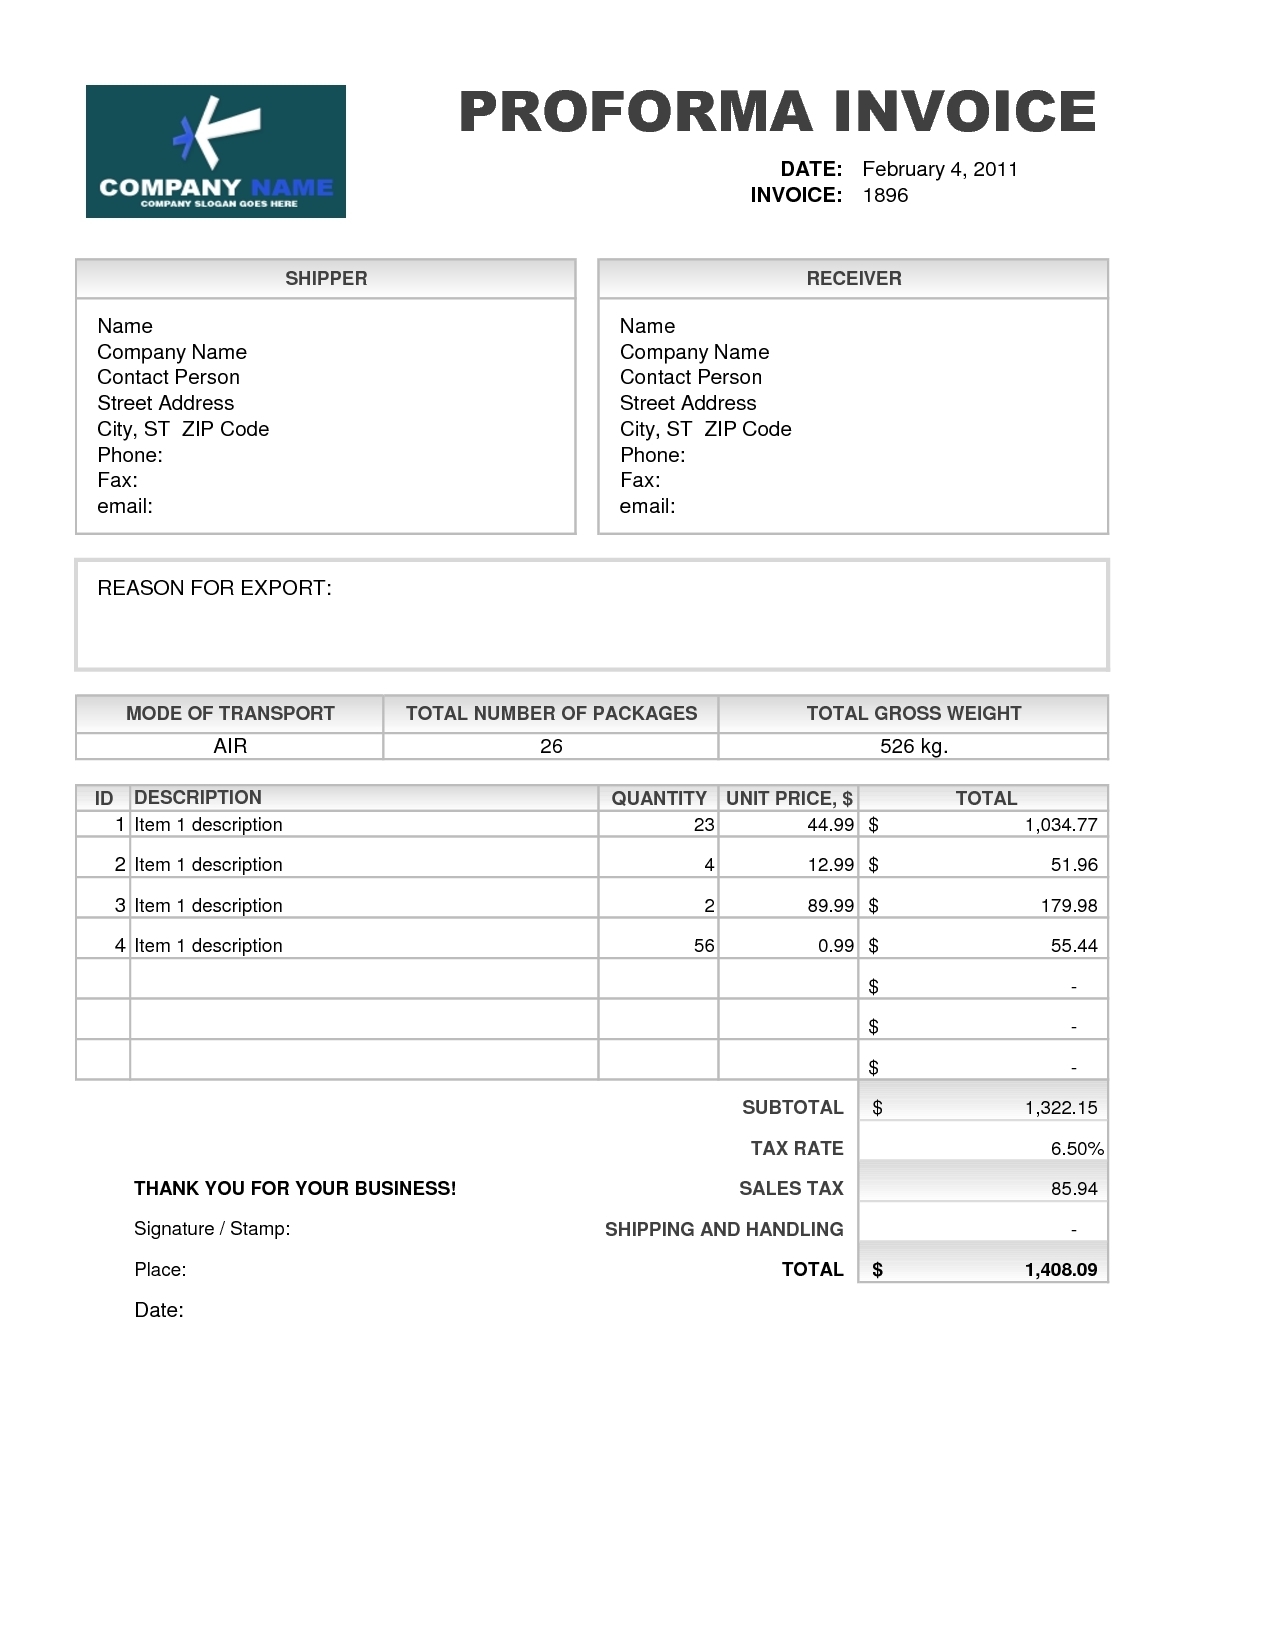 samples of proforma invoice invoice template free 2016 sample of proforma invoice